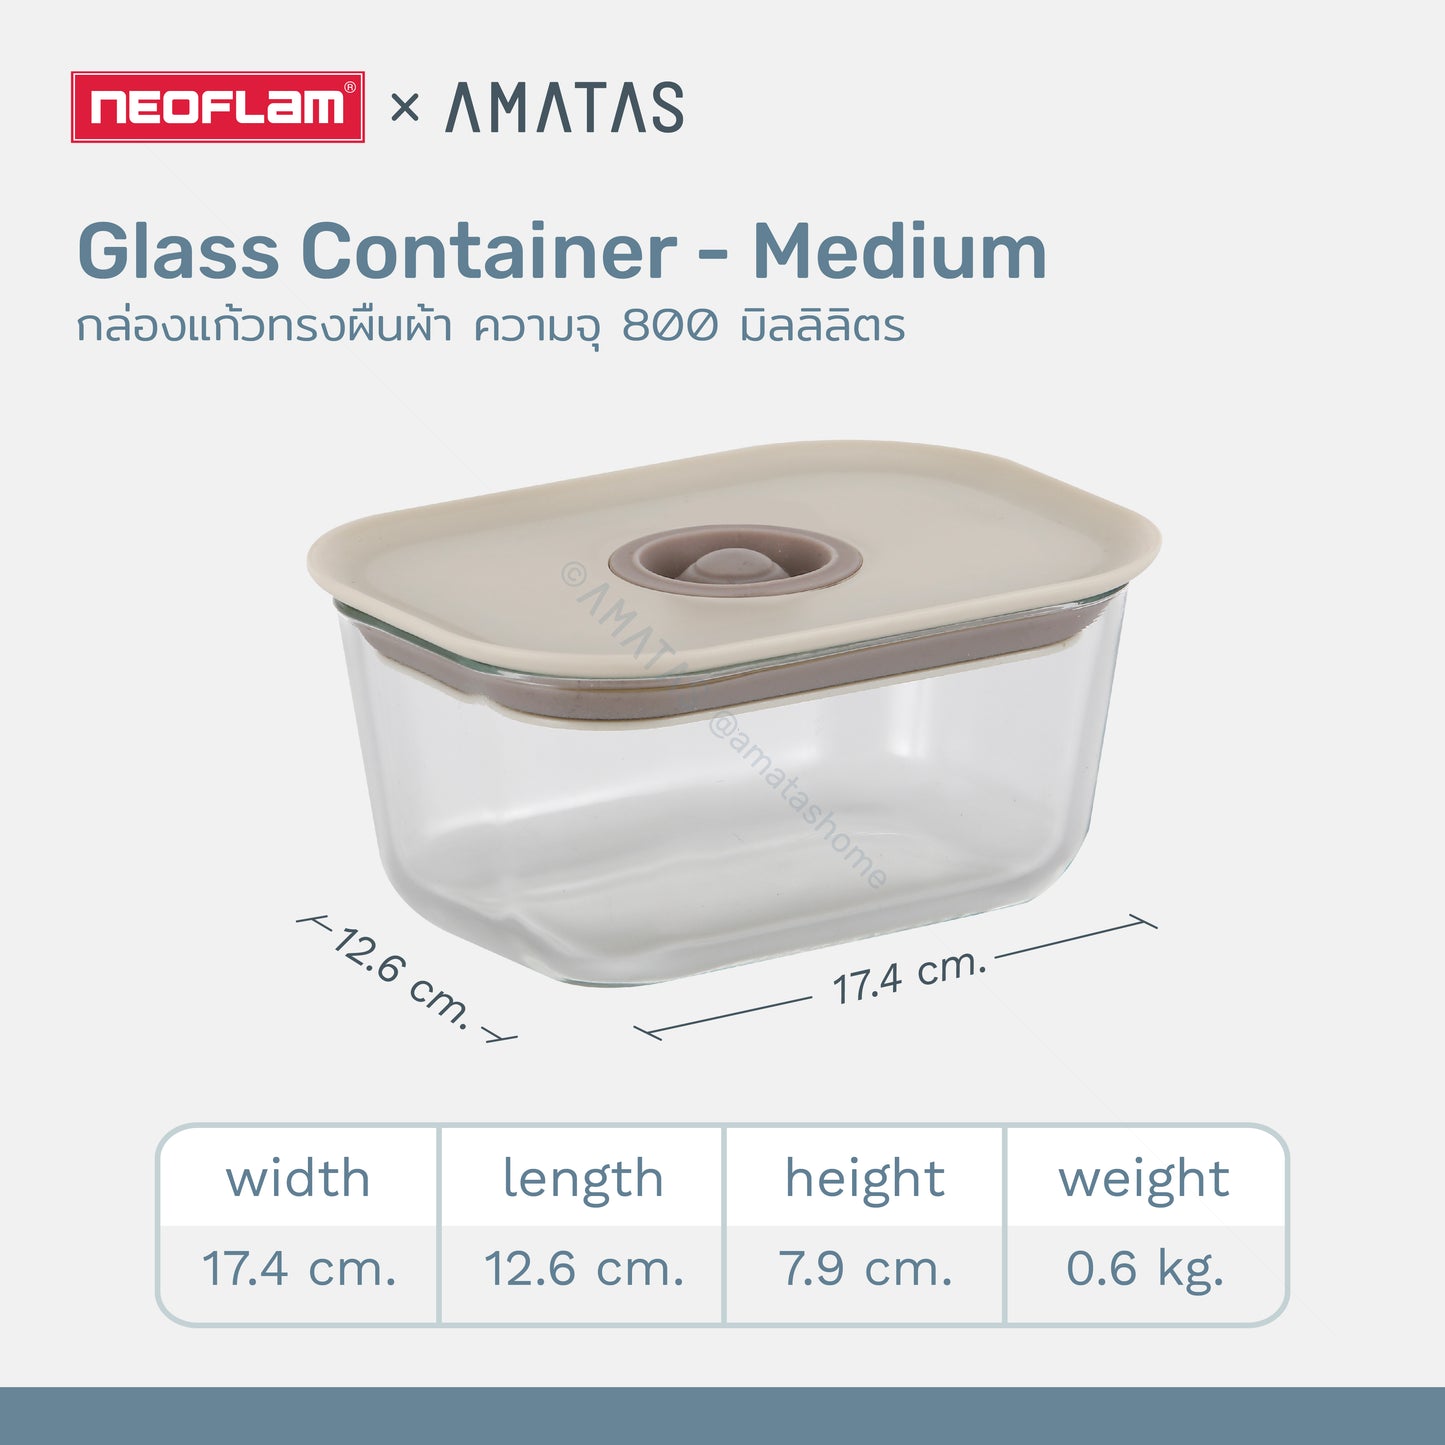 Neoflam FIKA กล่องแก้วสุญญากาศ กล่องข้าว กล่องใส่อาหารแก้ว ทนร้อน-เย็น เข้าไมโครเวฟได้